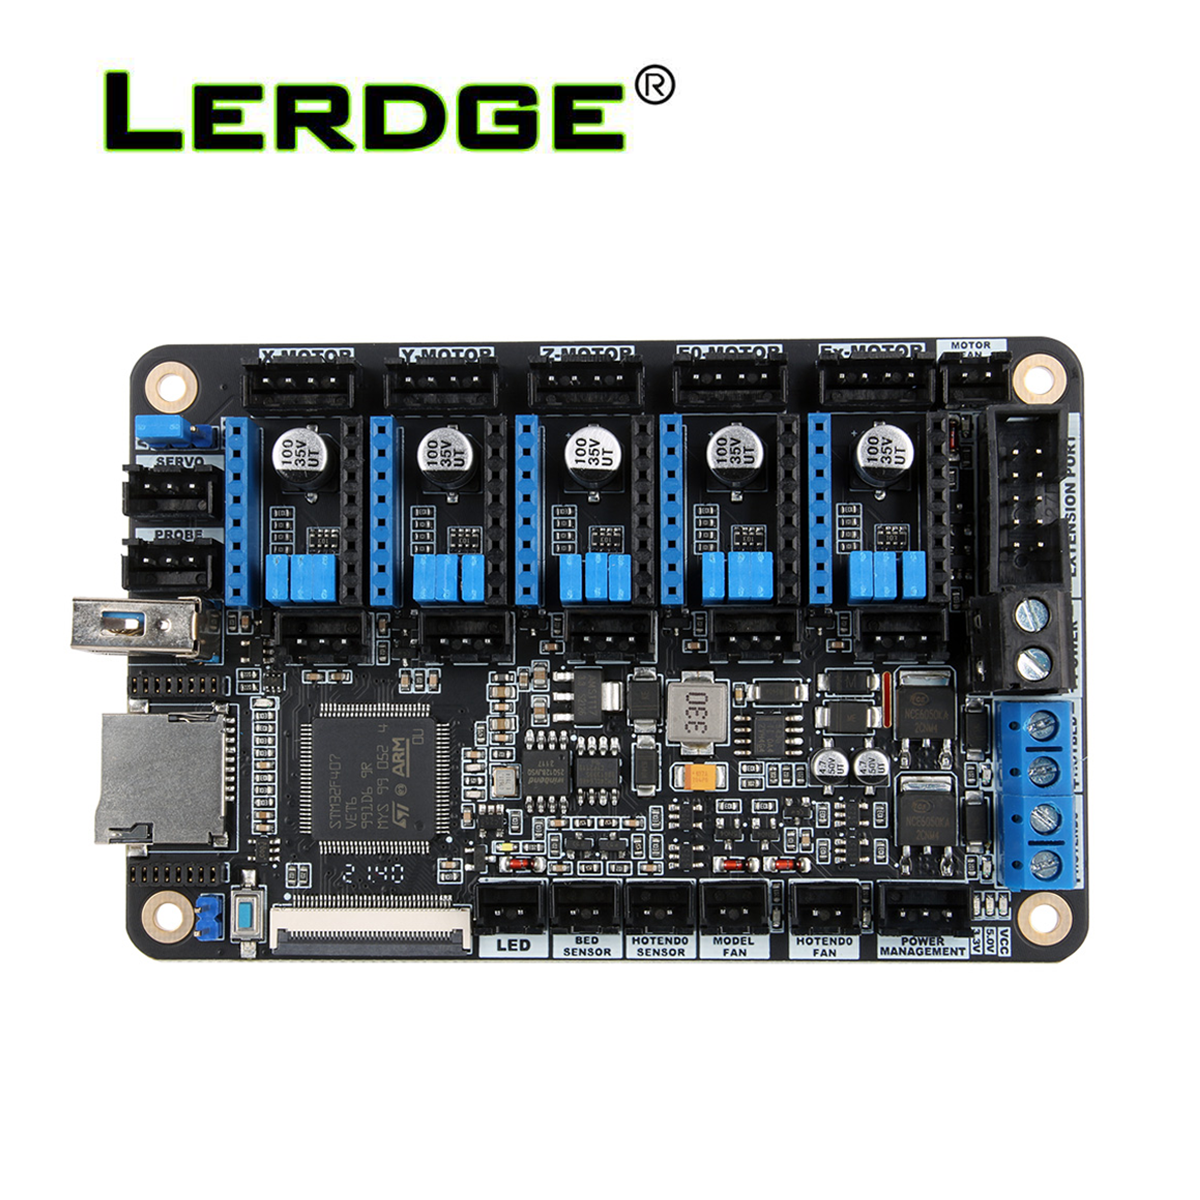 LERDGE Z Board Z2 kit - Lerdge Official Store